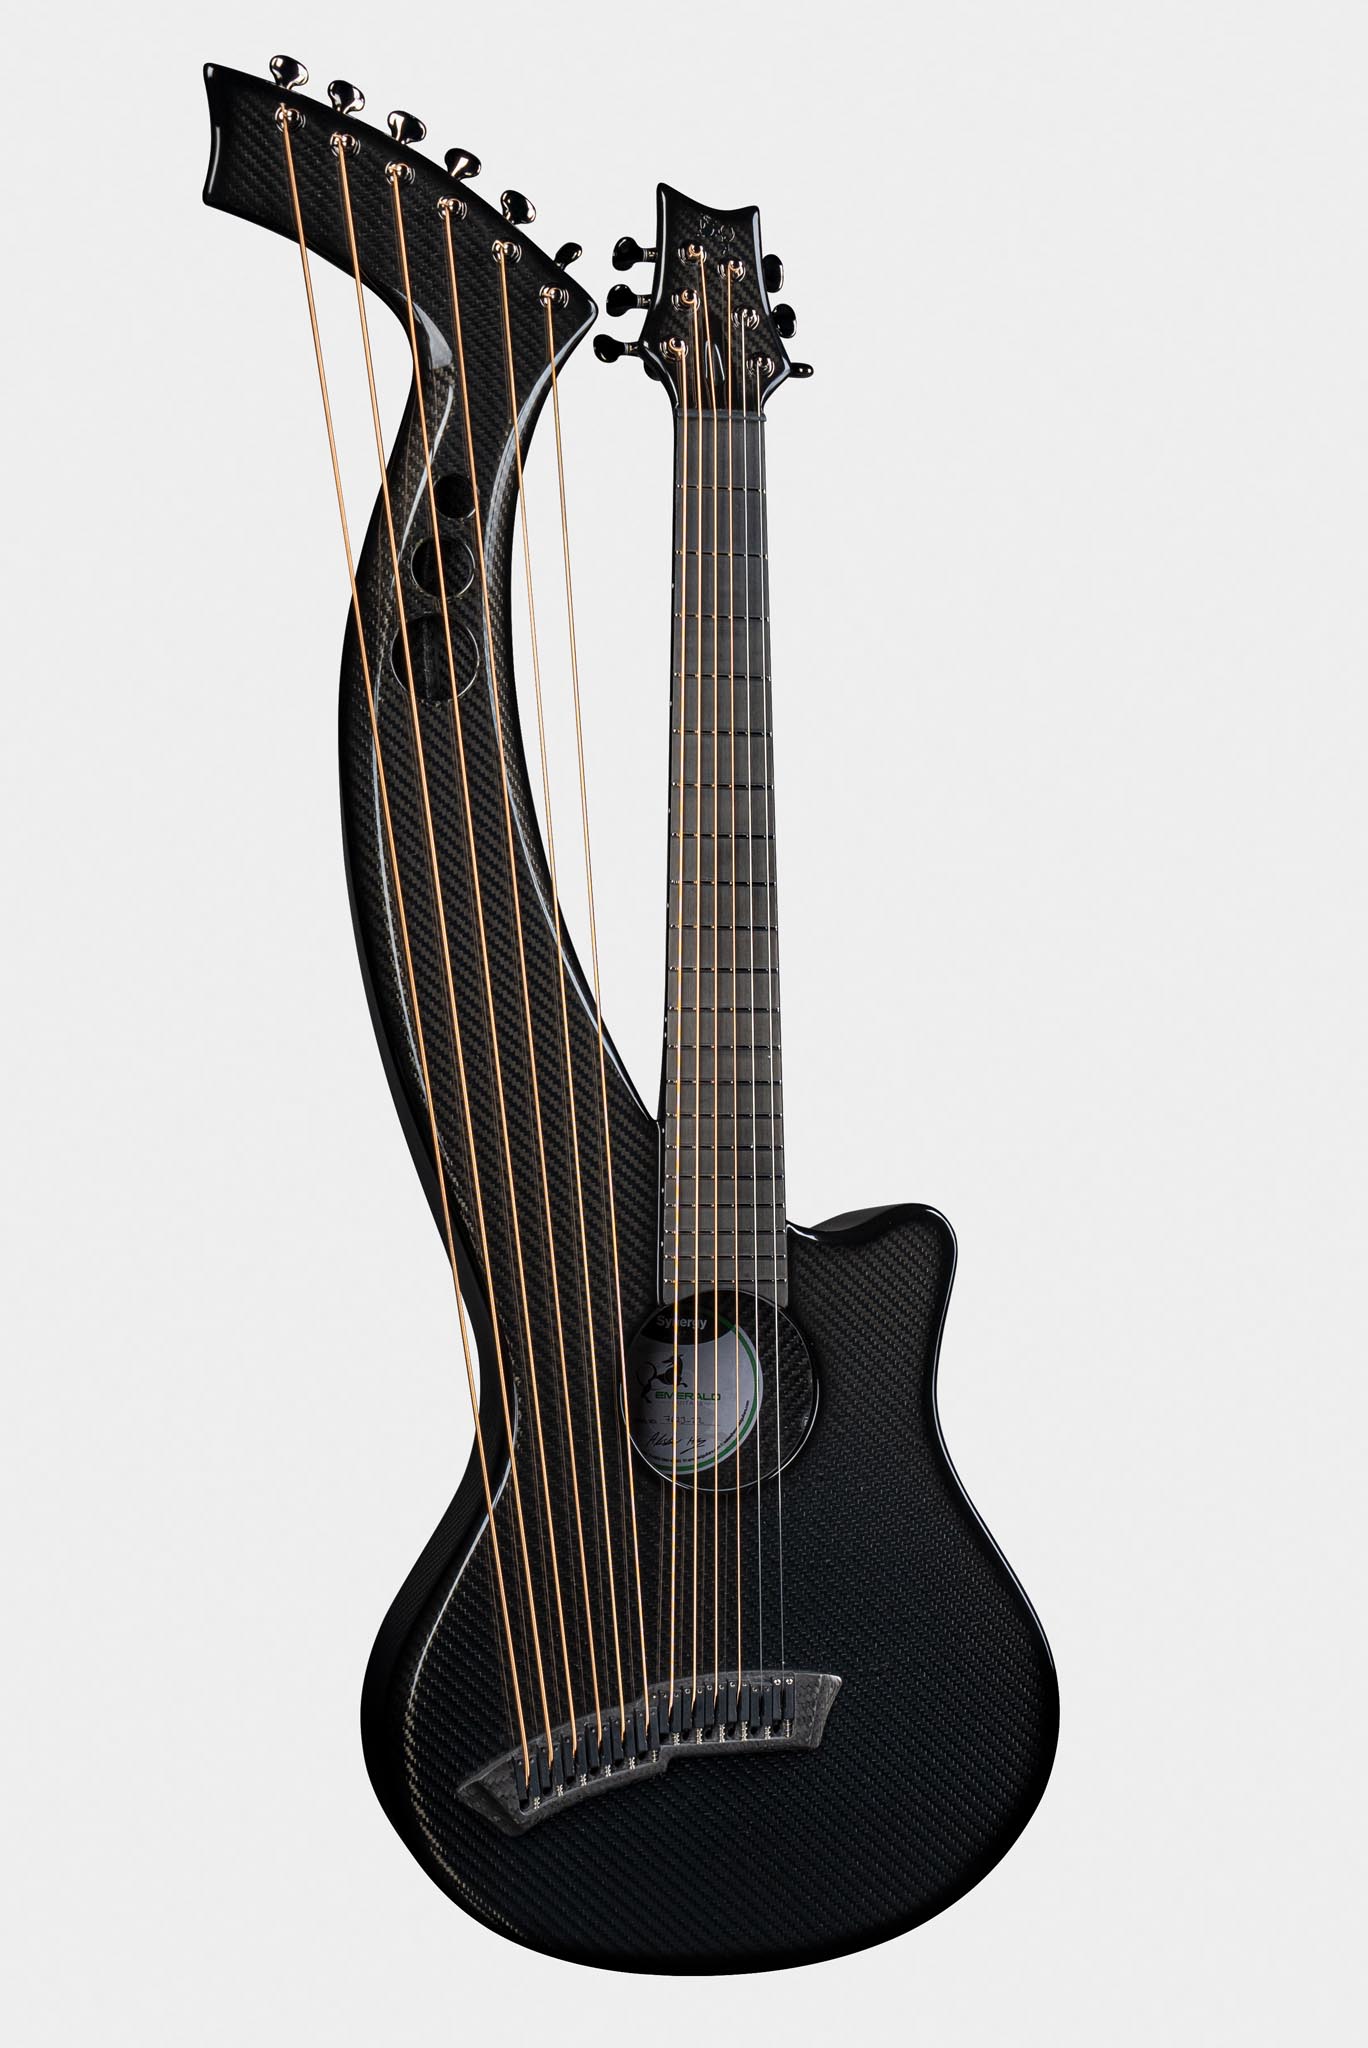 Black Carbon Fiber Harp Guitar